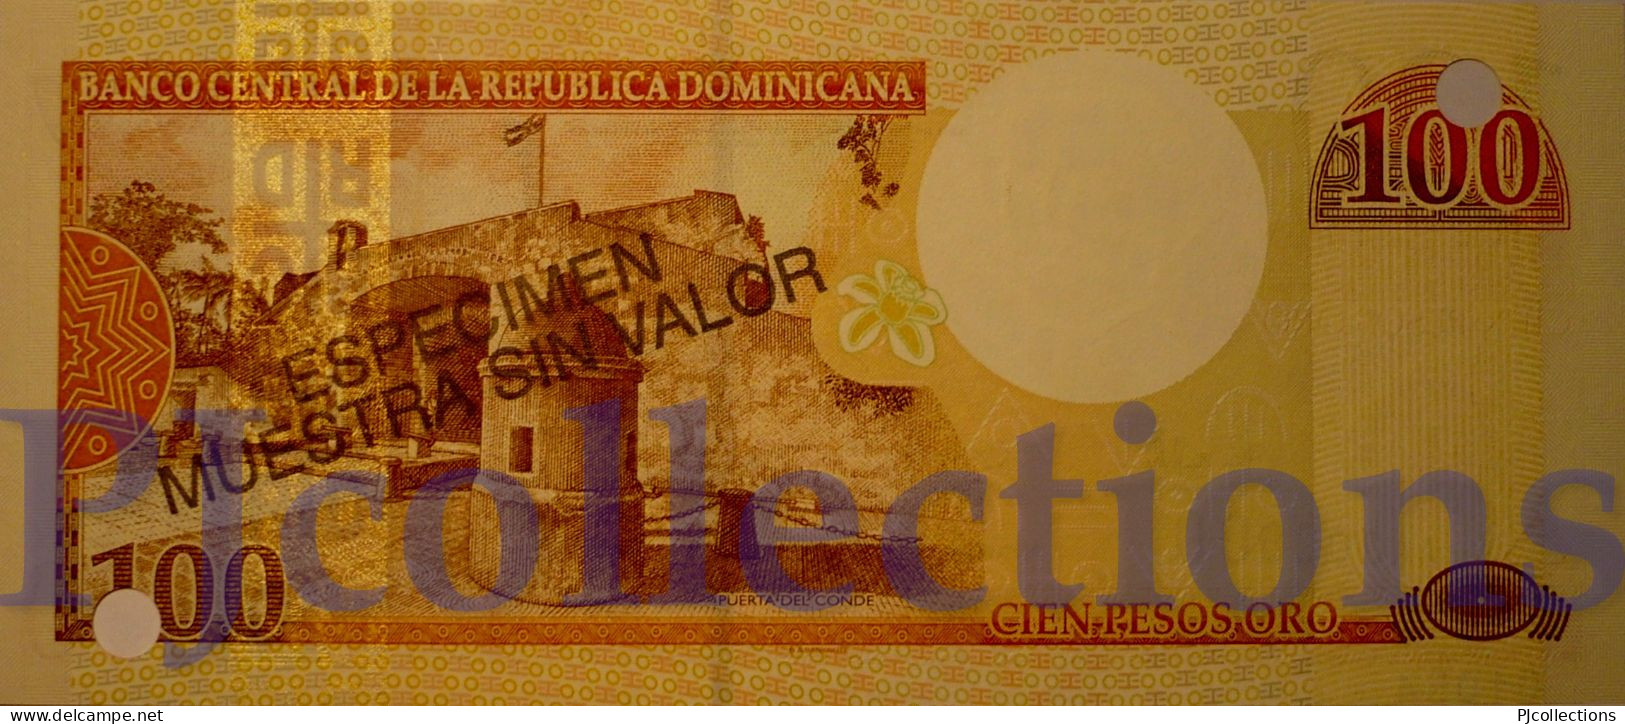 DOMINICAN REPUBLIC 100 PESOS ORO 2000 PICK 167s1 SPECIMEN UNC NUMBER "01054"" - Dominicana